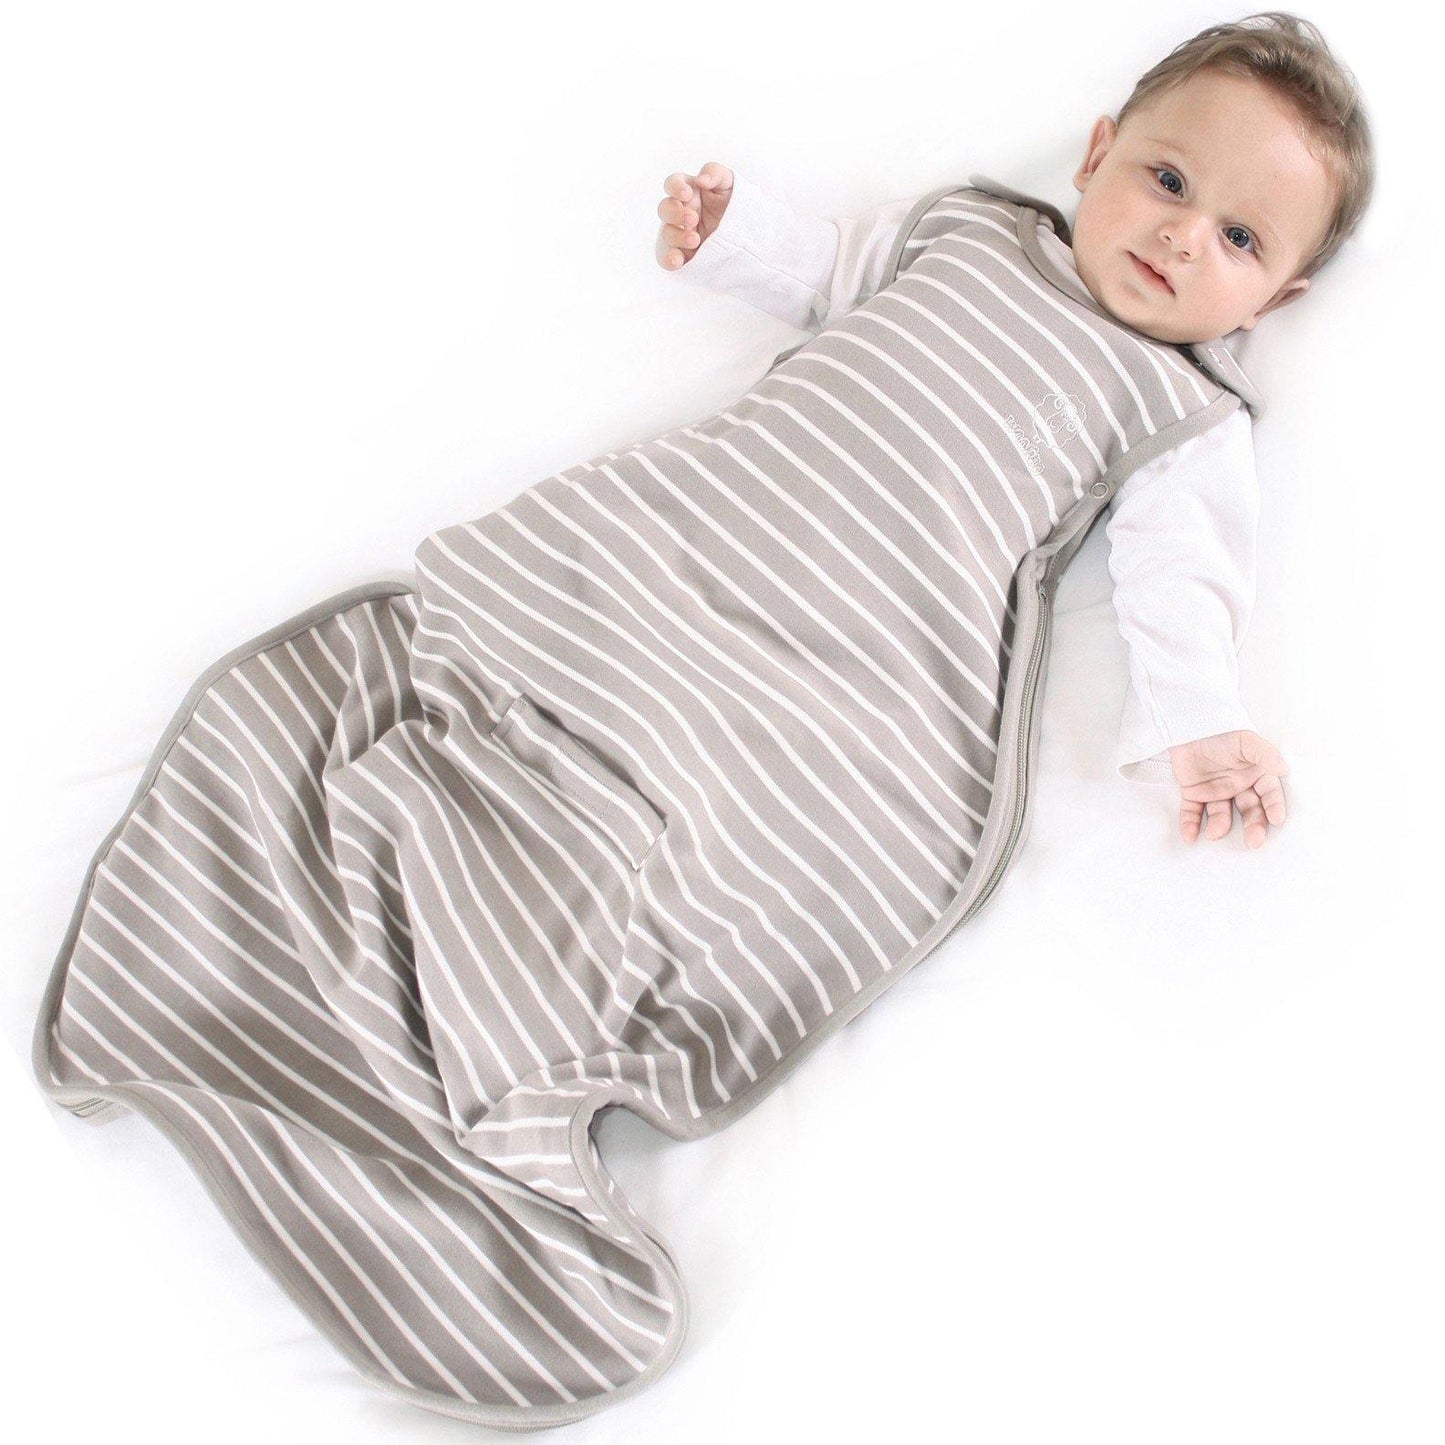 Baby wearing Woolino 4 Season Baby Sleep Bag in Merino Wool - Earth